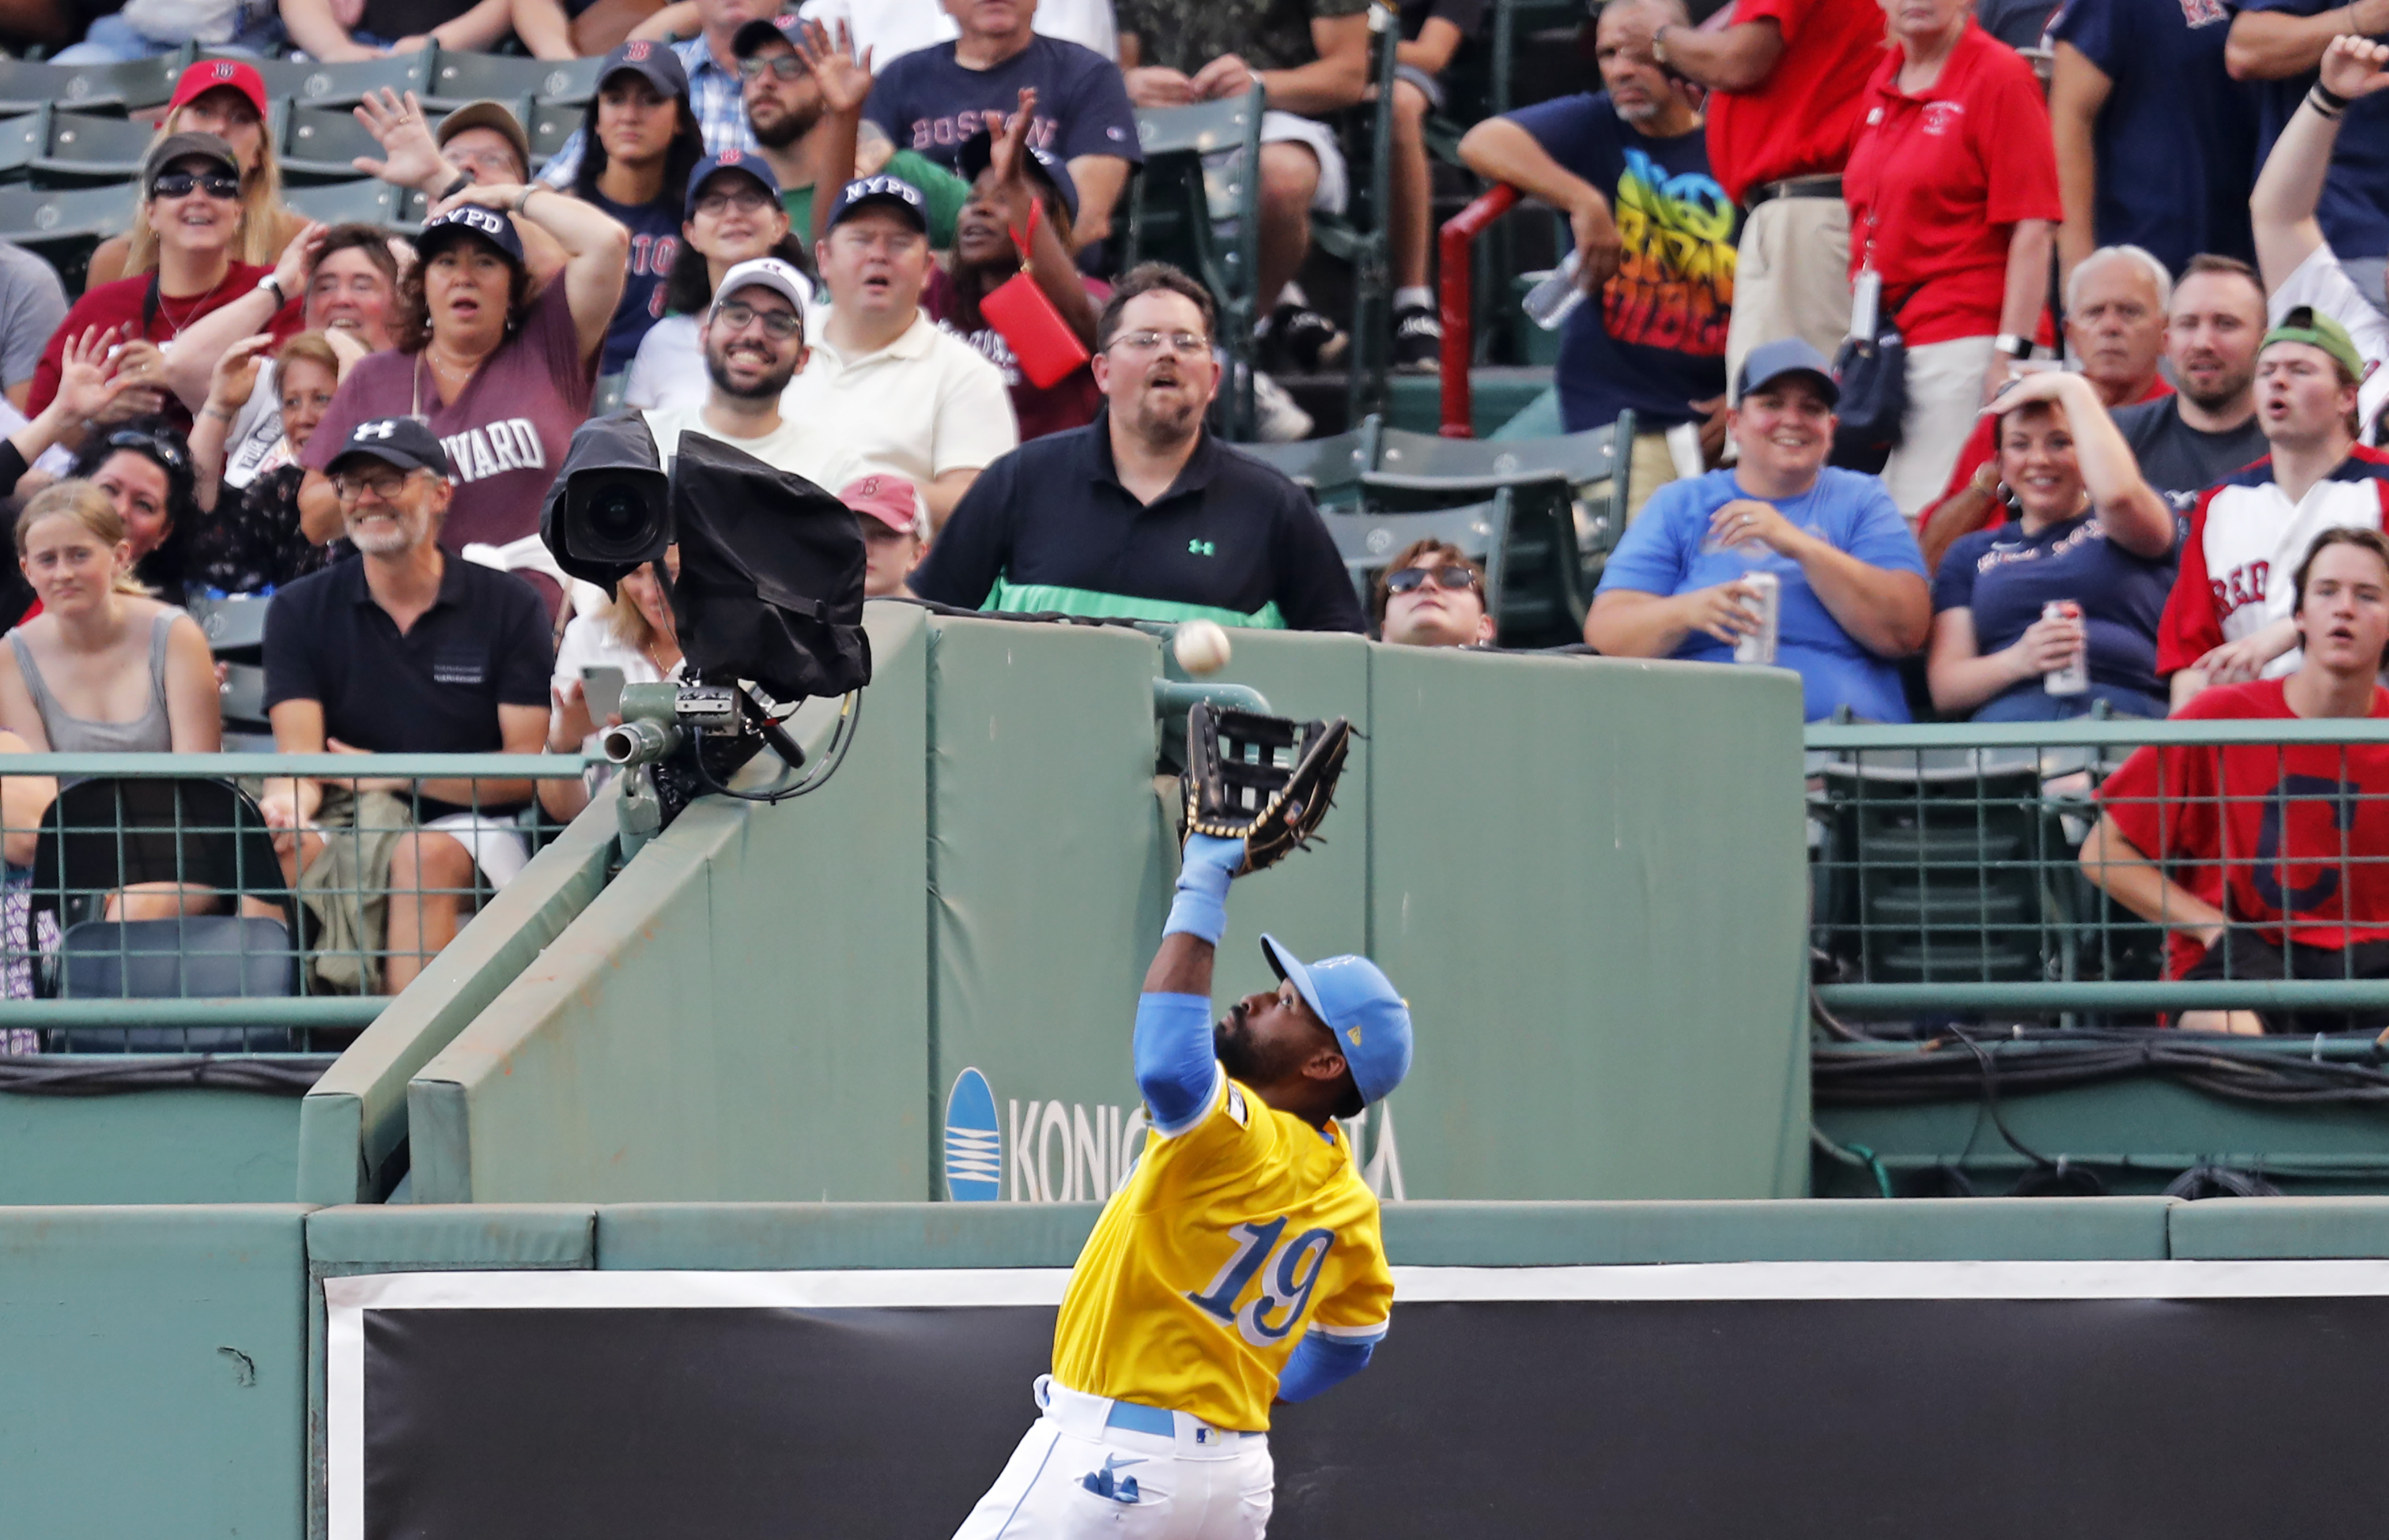 Jackie Bradley Jr. enjoys baseball. But he won't talk about it once he's  done. - The Boston Globe